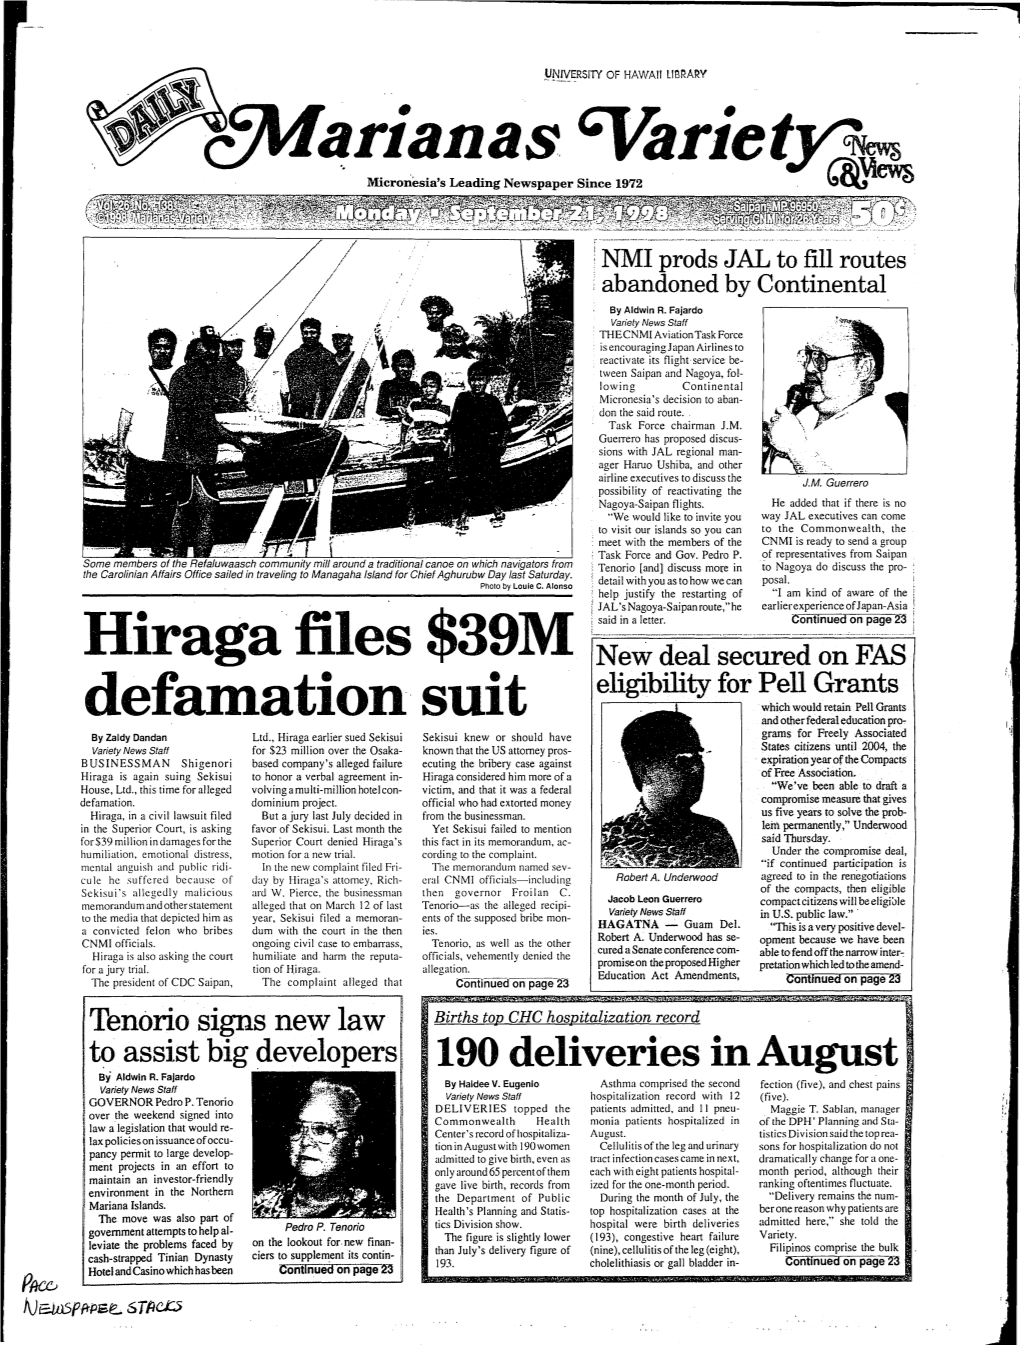 Hiraga Files $39M Defa1nation Suit